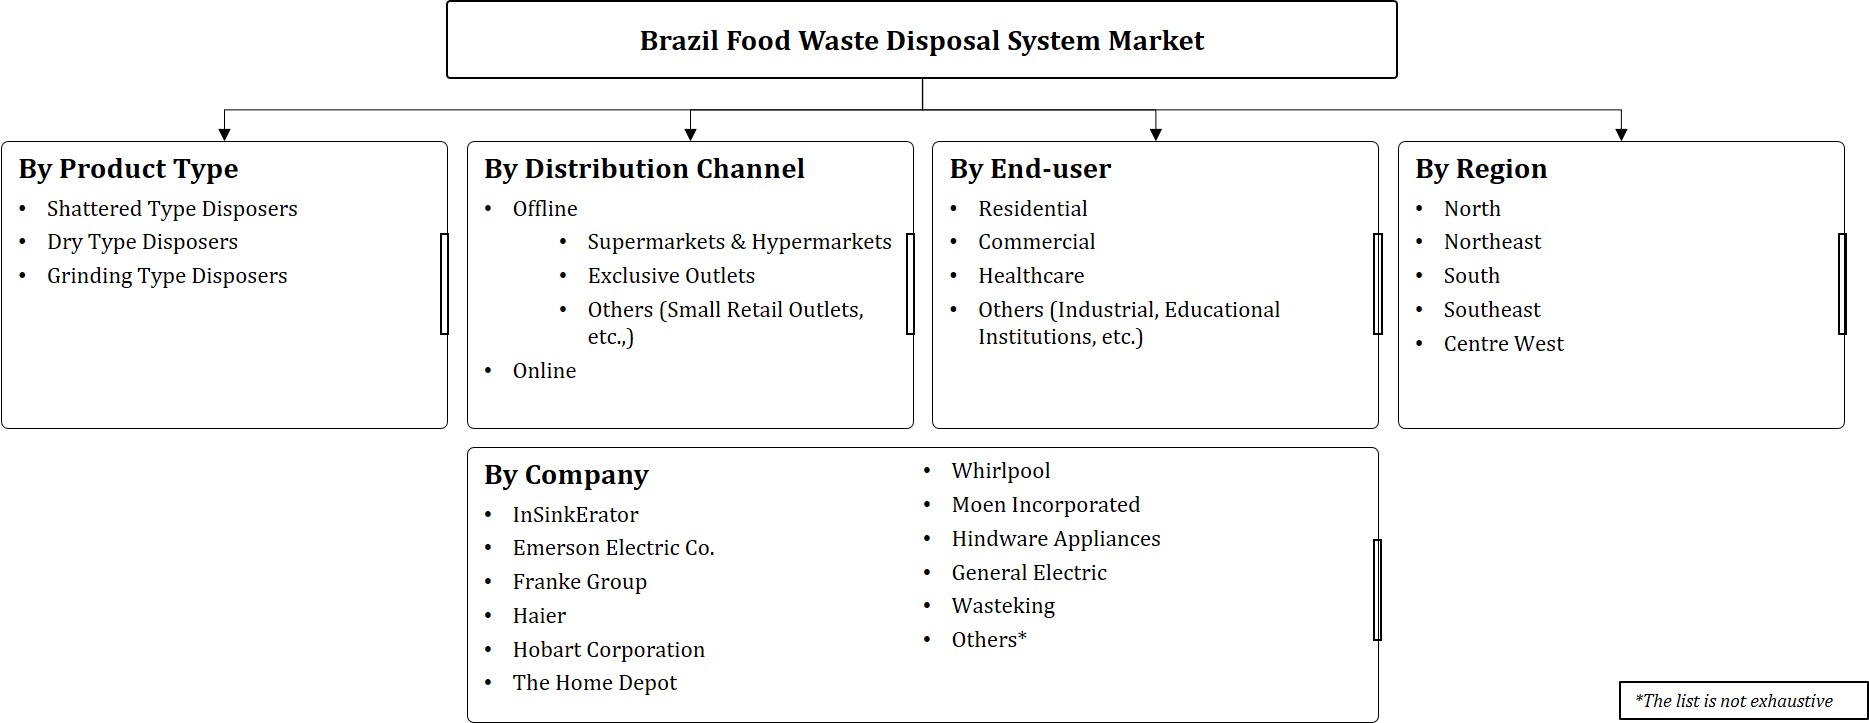 Brazil Food Waste Disposal System Market segmentation